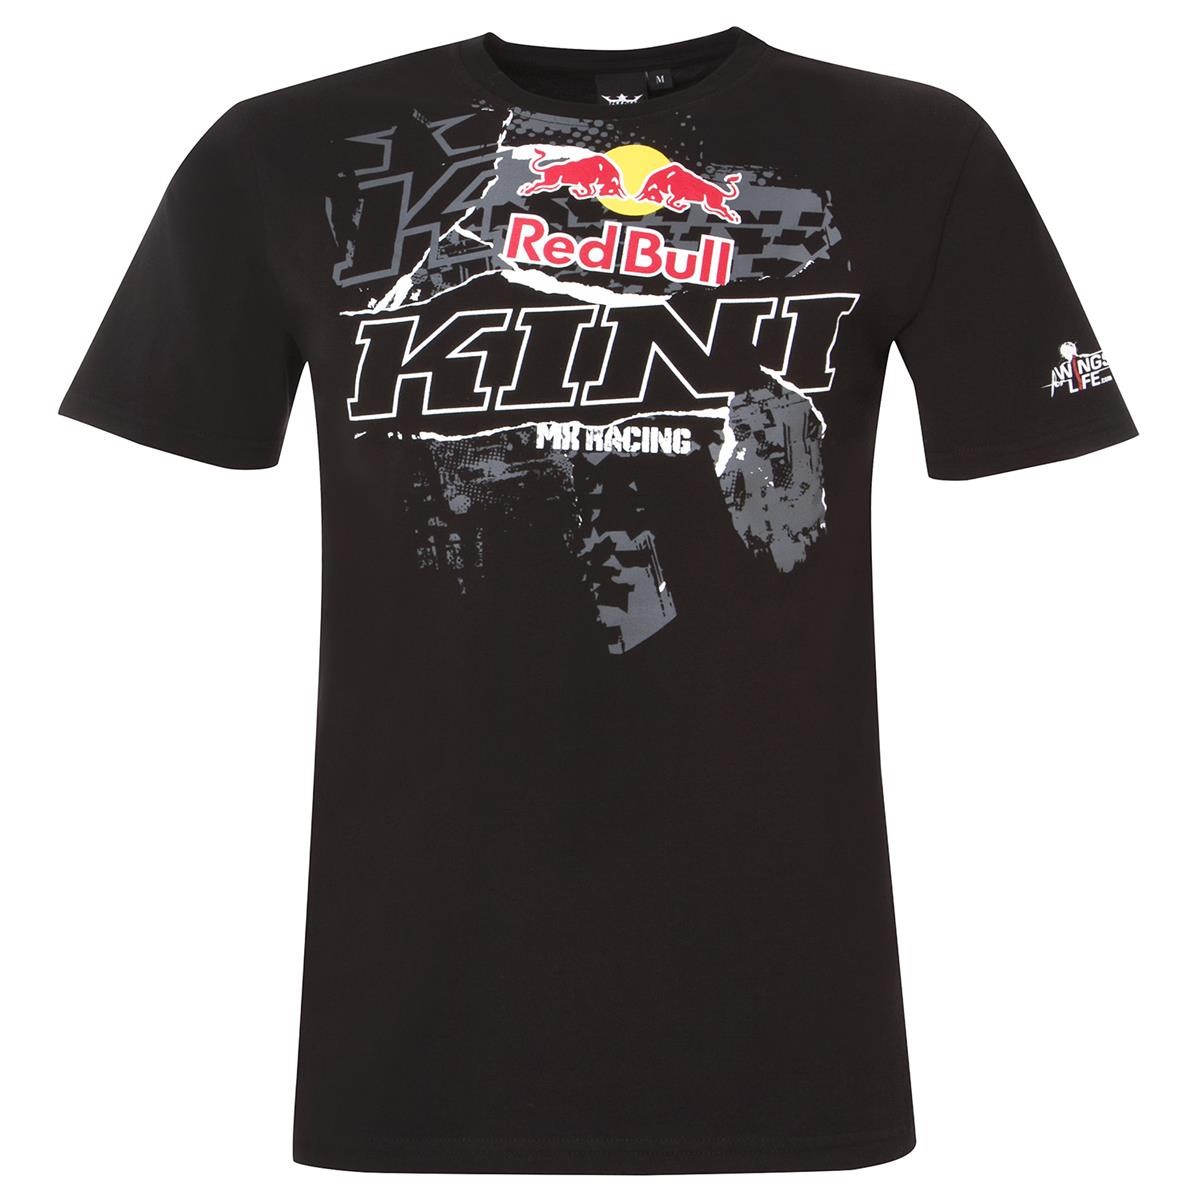 Kini Red Bull T-Shirt Collage Black